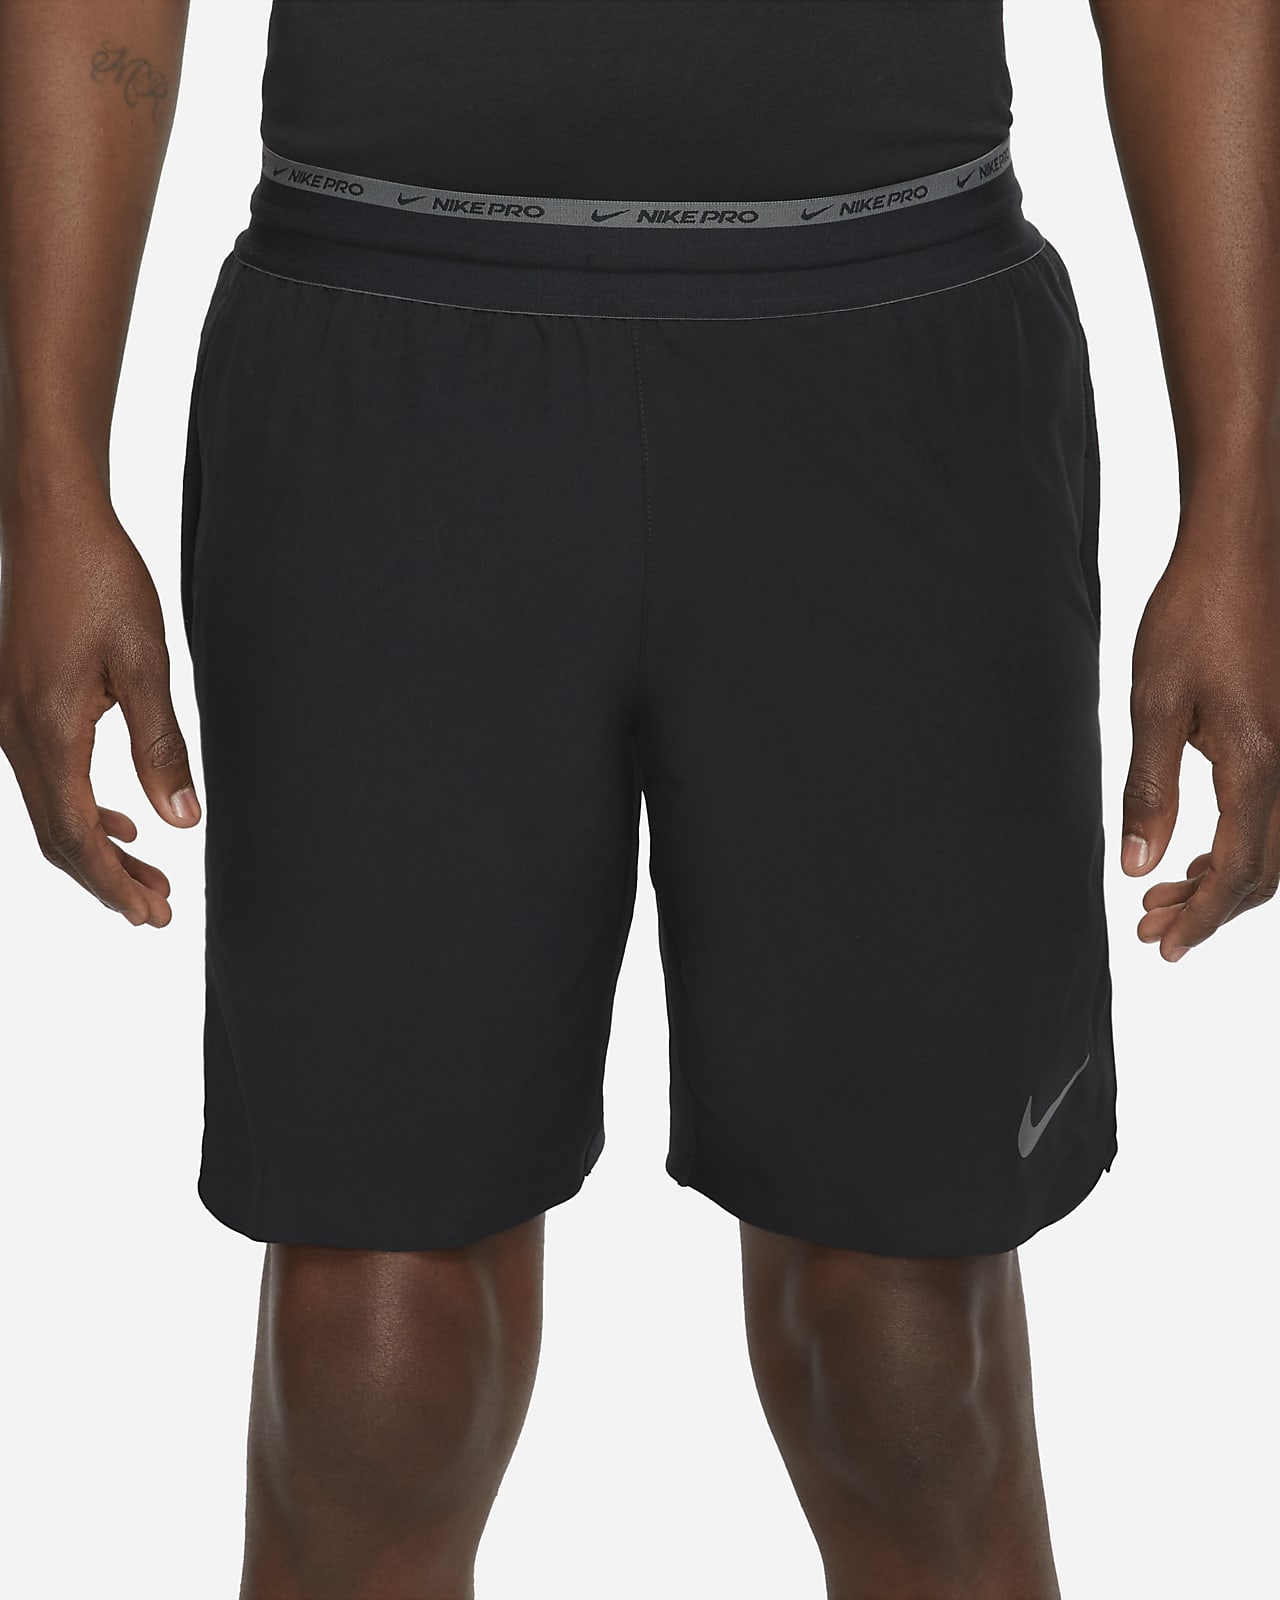 Nike Pro Mens Dri-FIT Brief Shorts, Men's Training Shorts